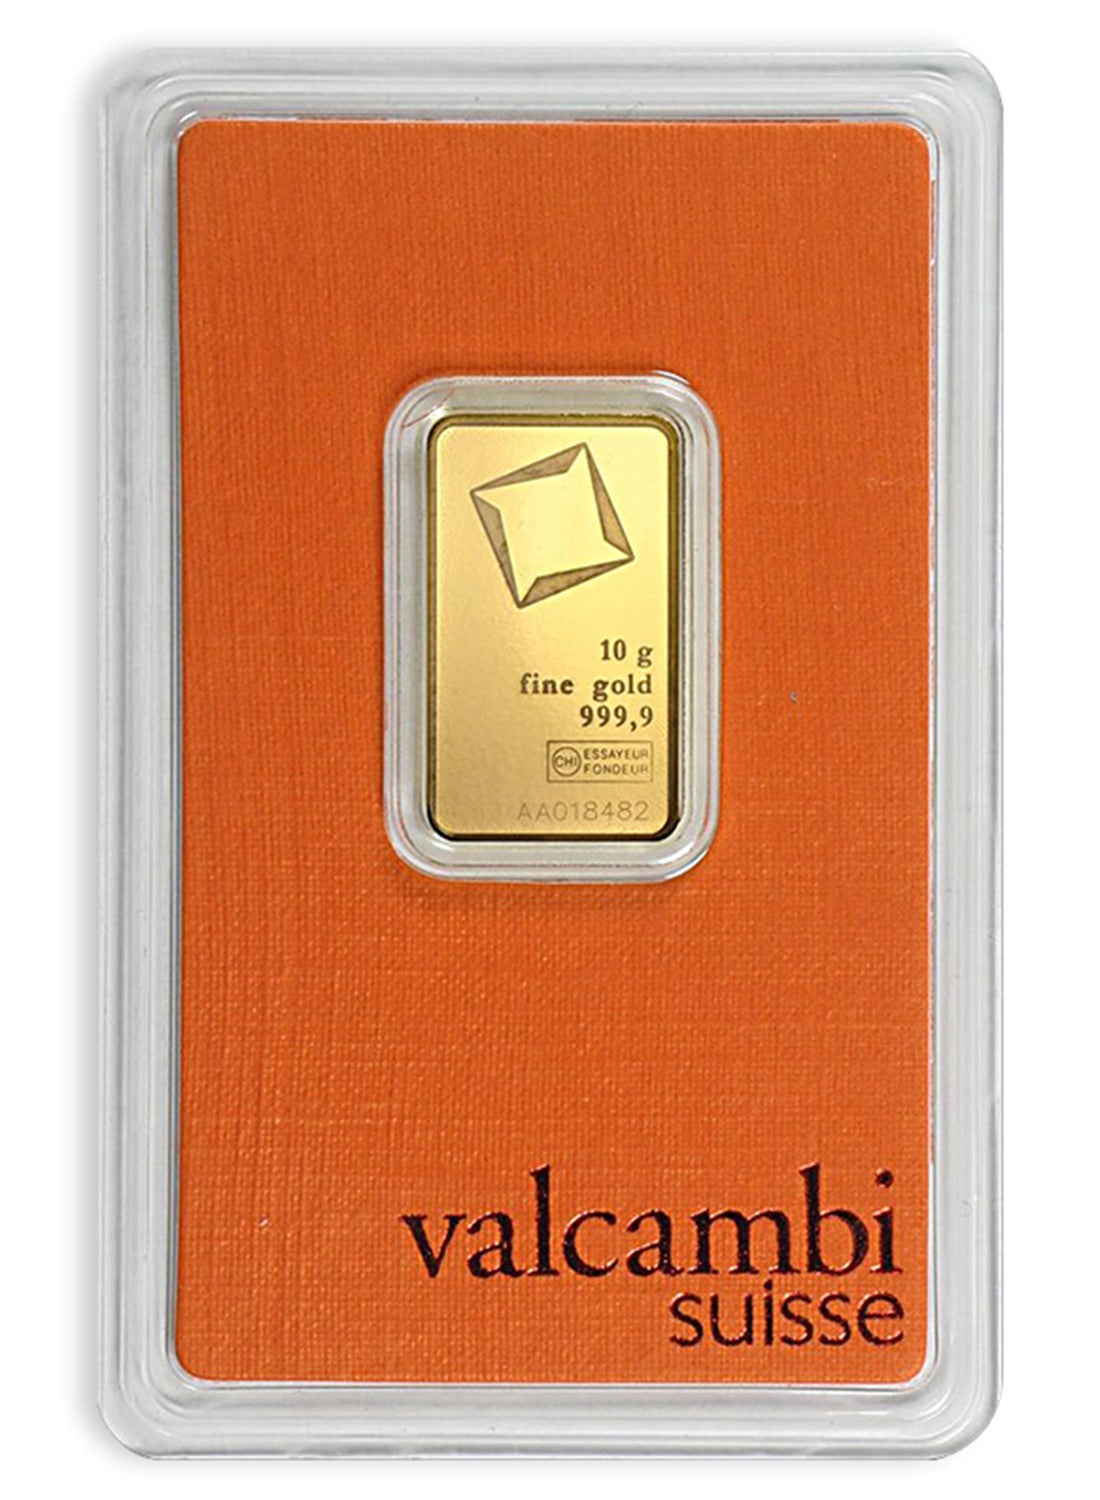 Valcambi Suisse 10g Fine Gold 999.9 Purity 24KT - FKJGBR24K6064